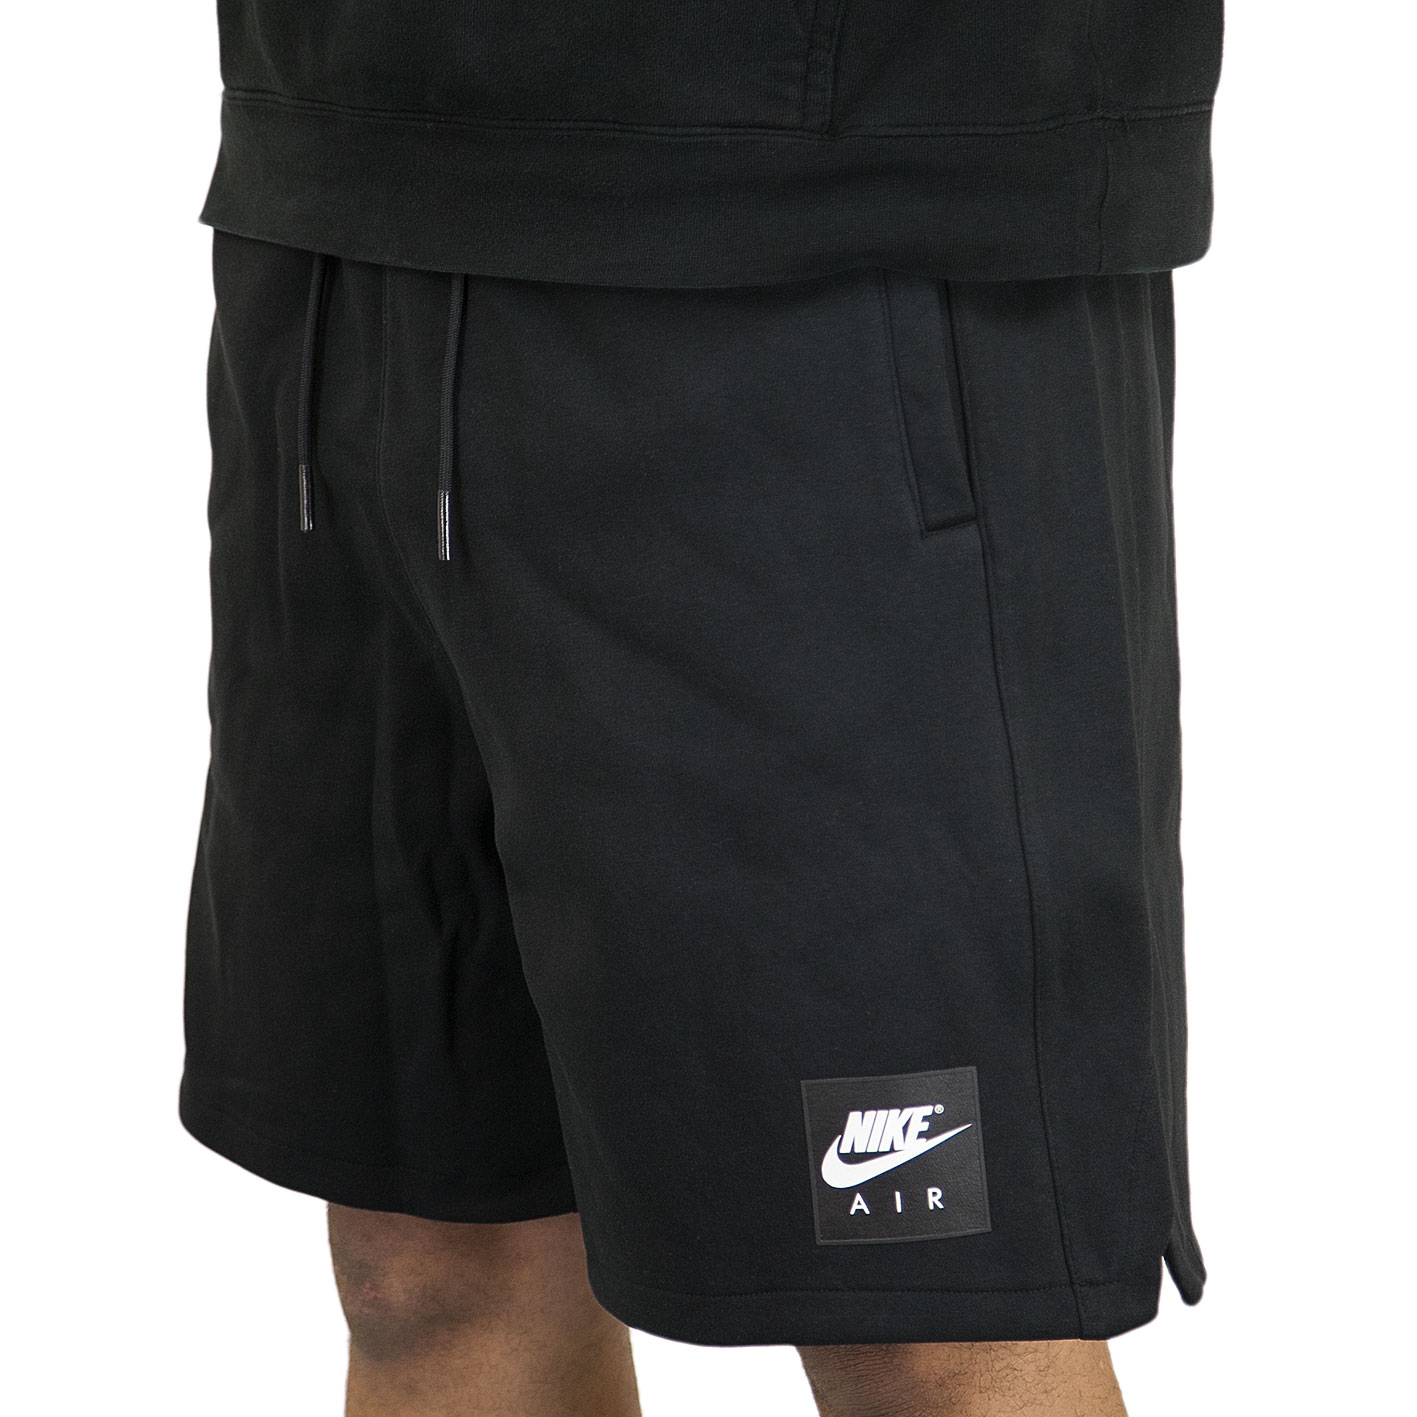 ☆ Nike Shorts Air Fleece schwarz/weiß - hier bestellen!